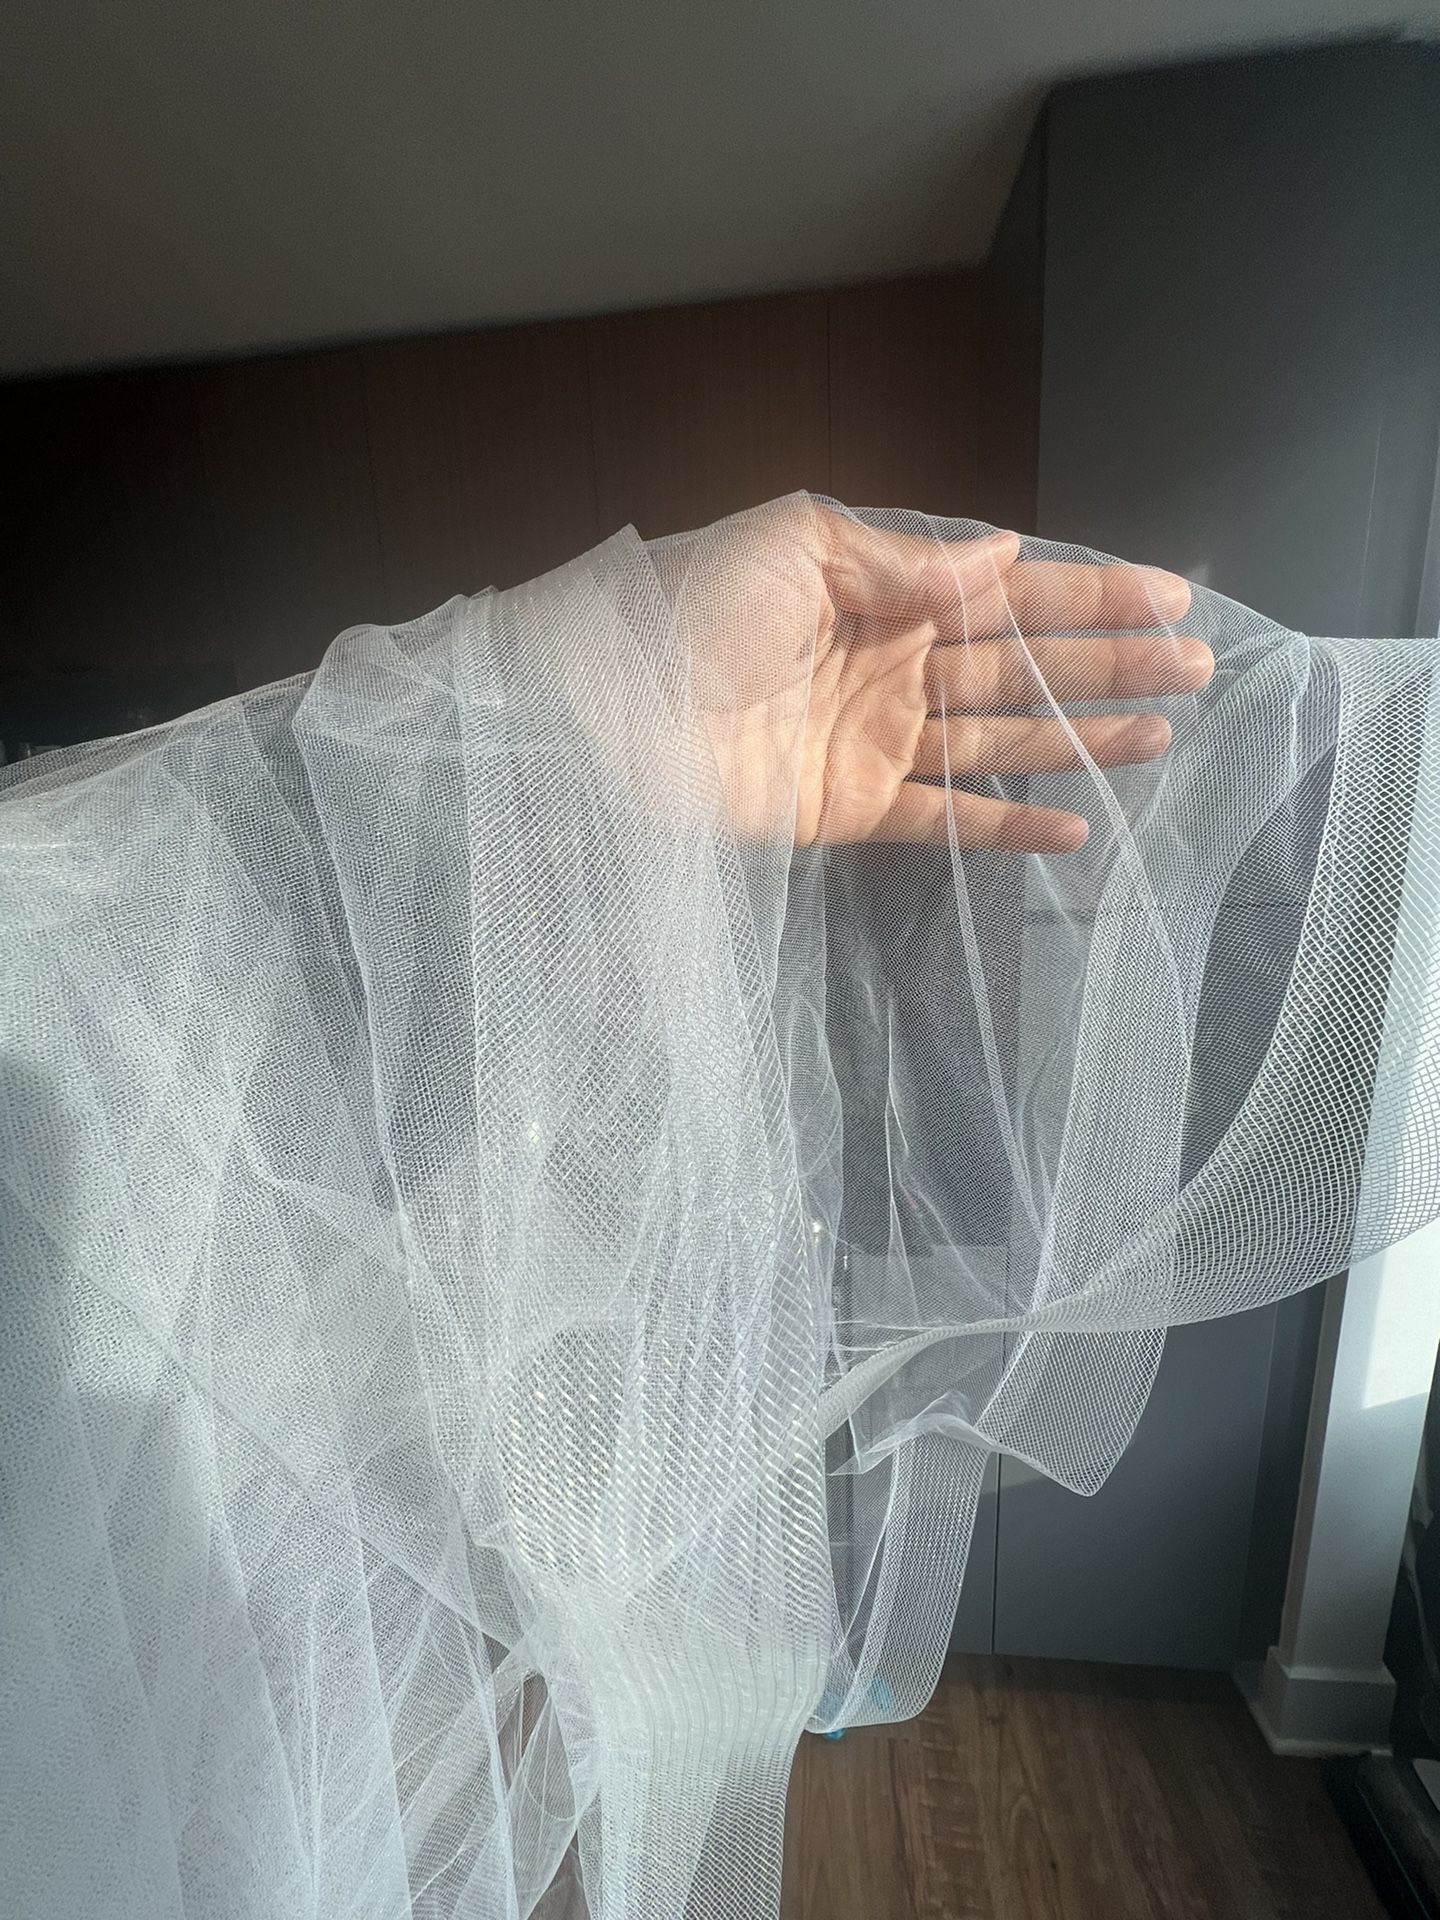 Bridal veil 